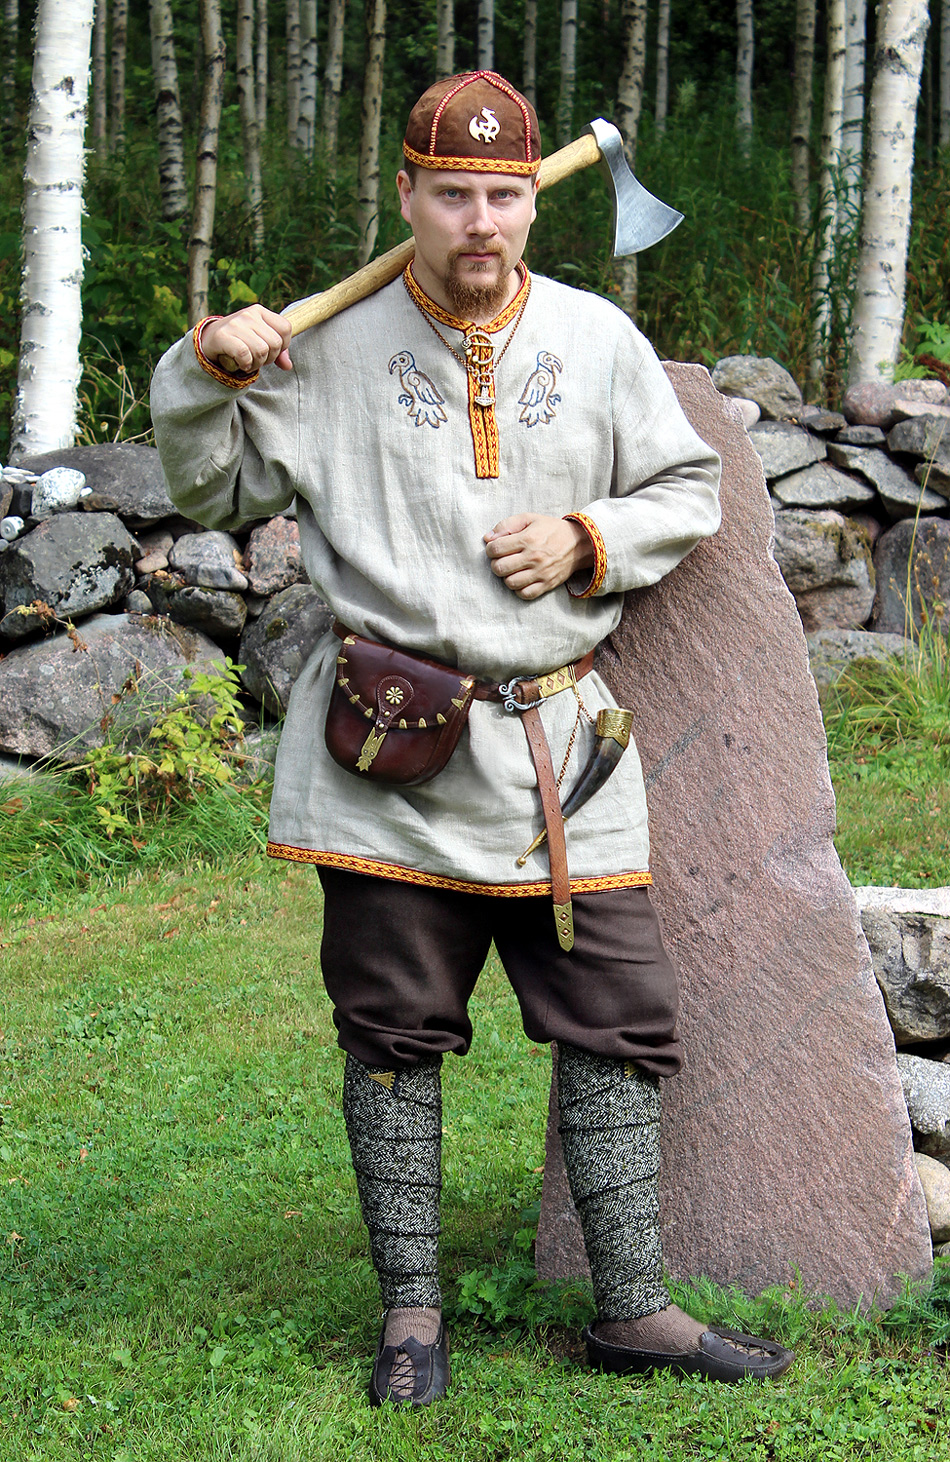 Viking costume 2 by Astalo on DeviantArt